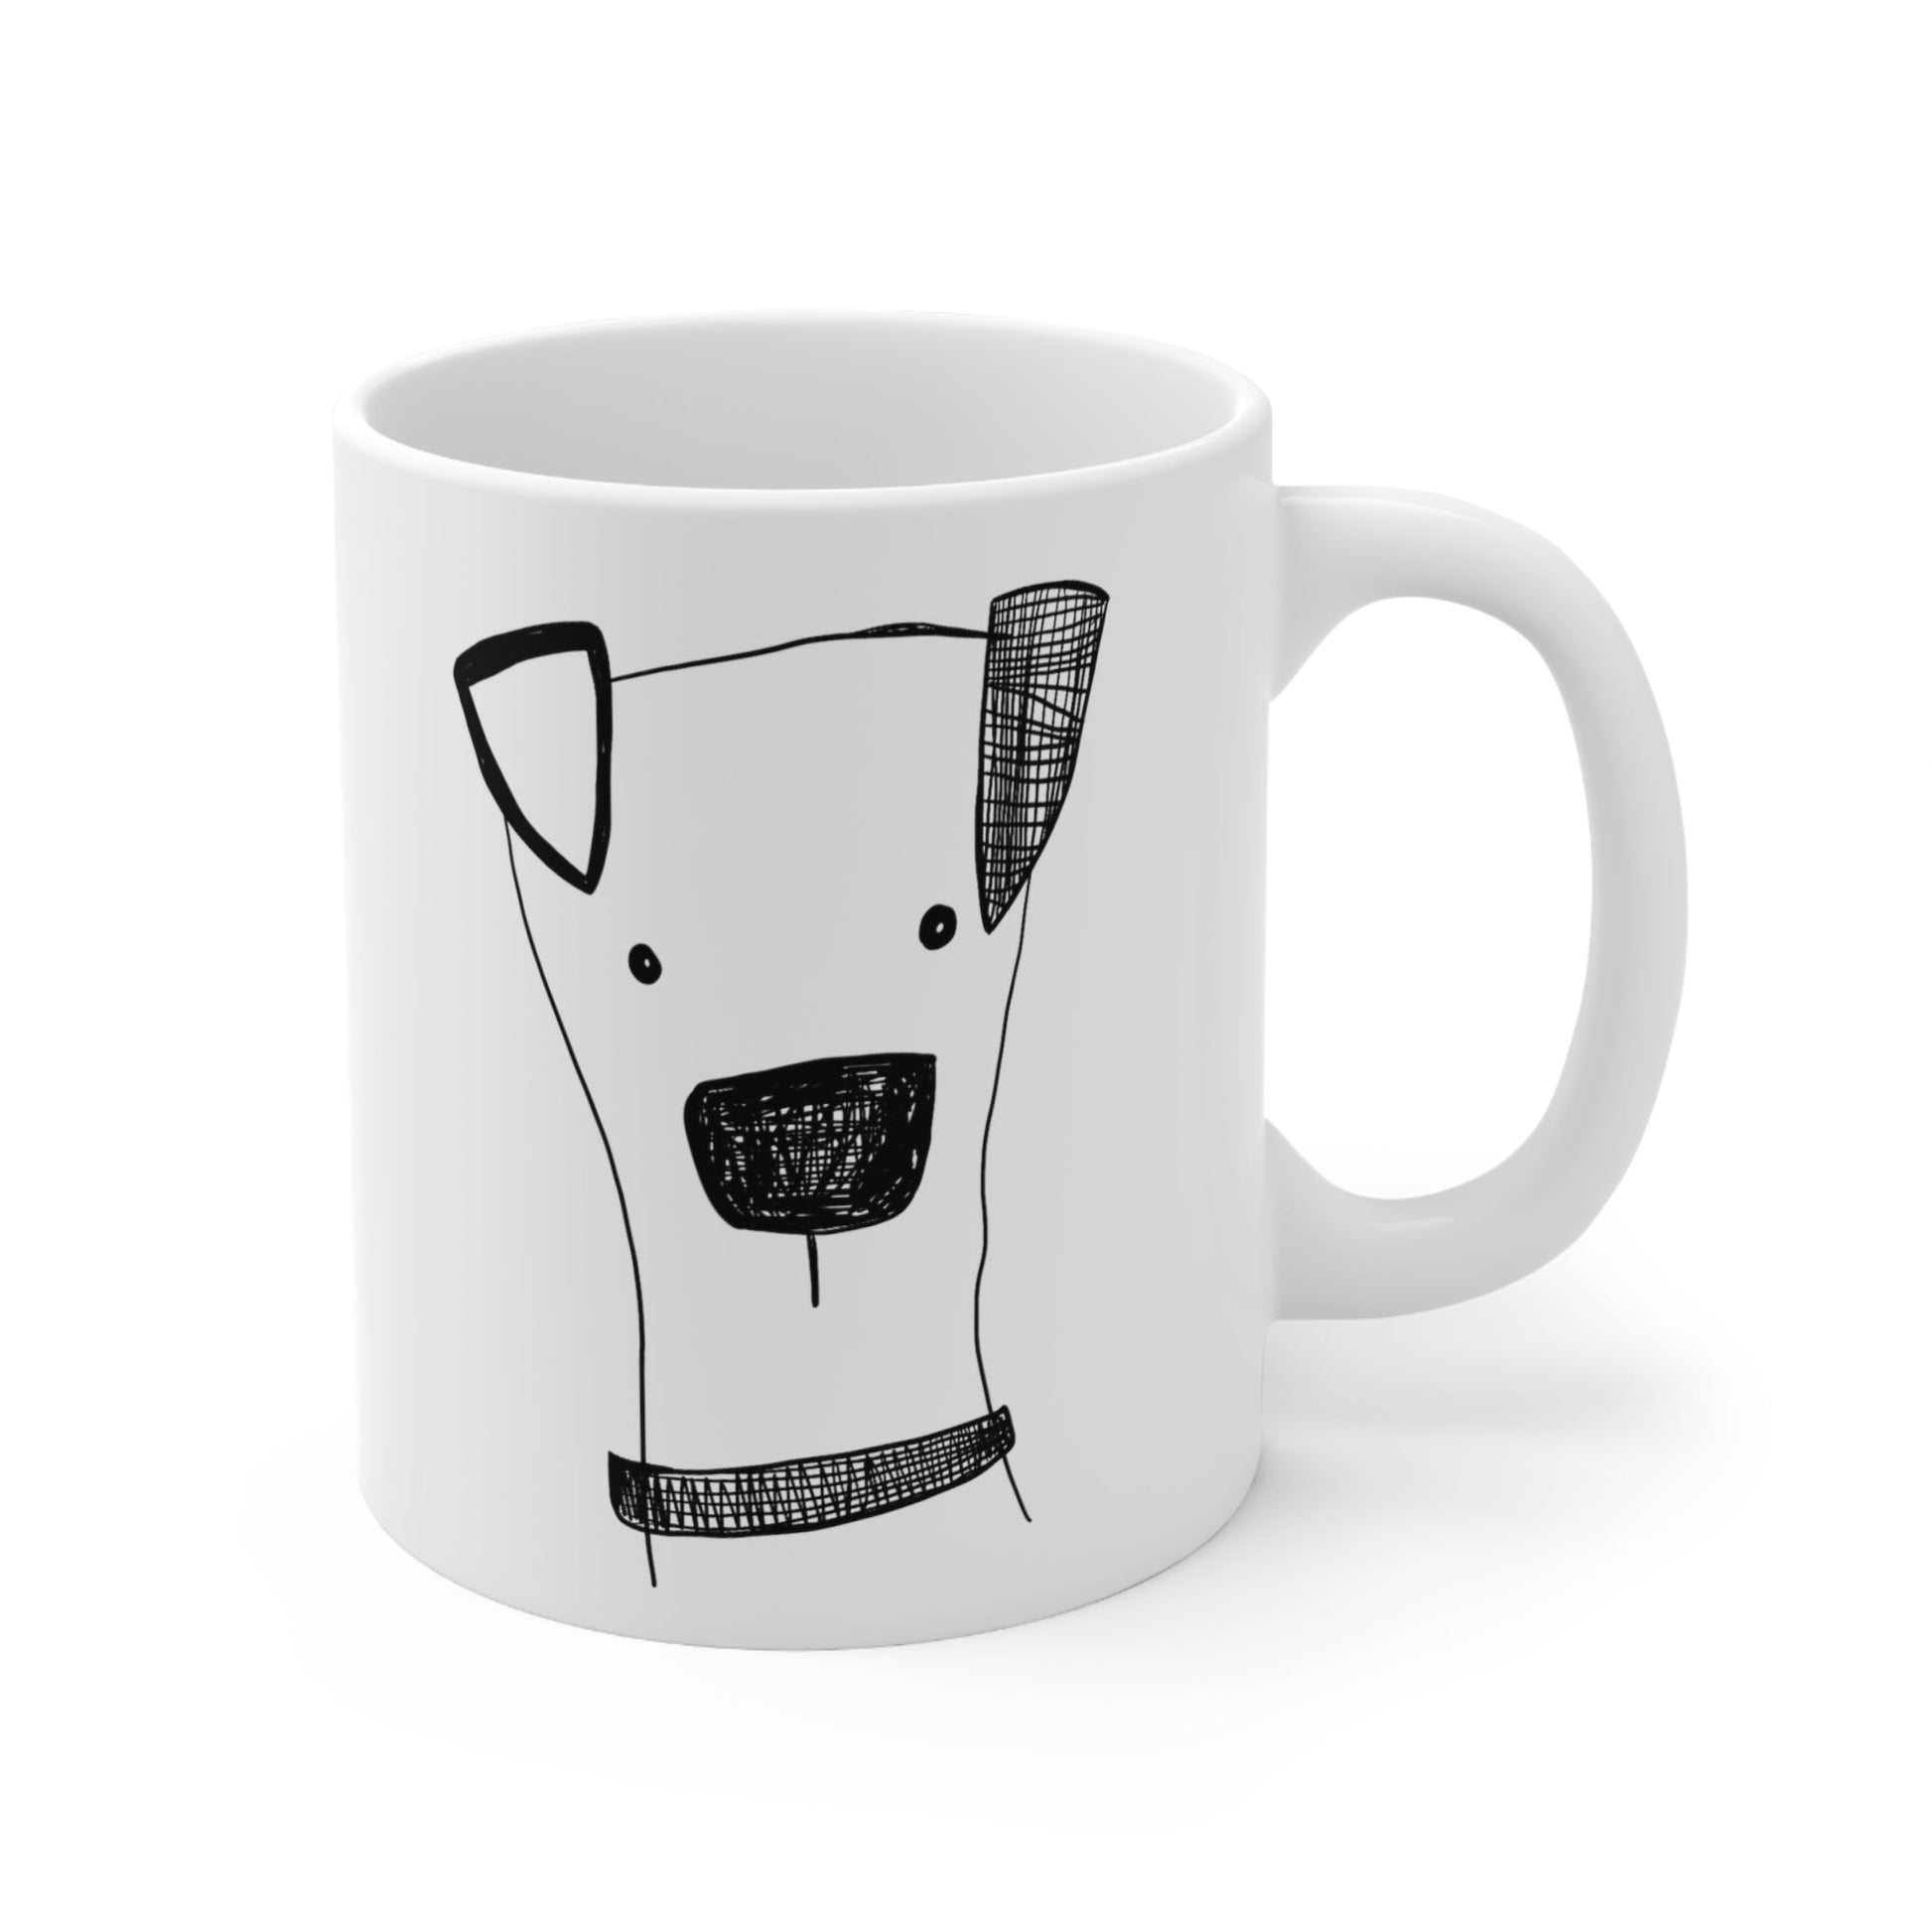 puppy mug - The muggin shop